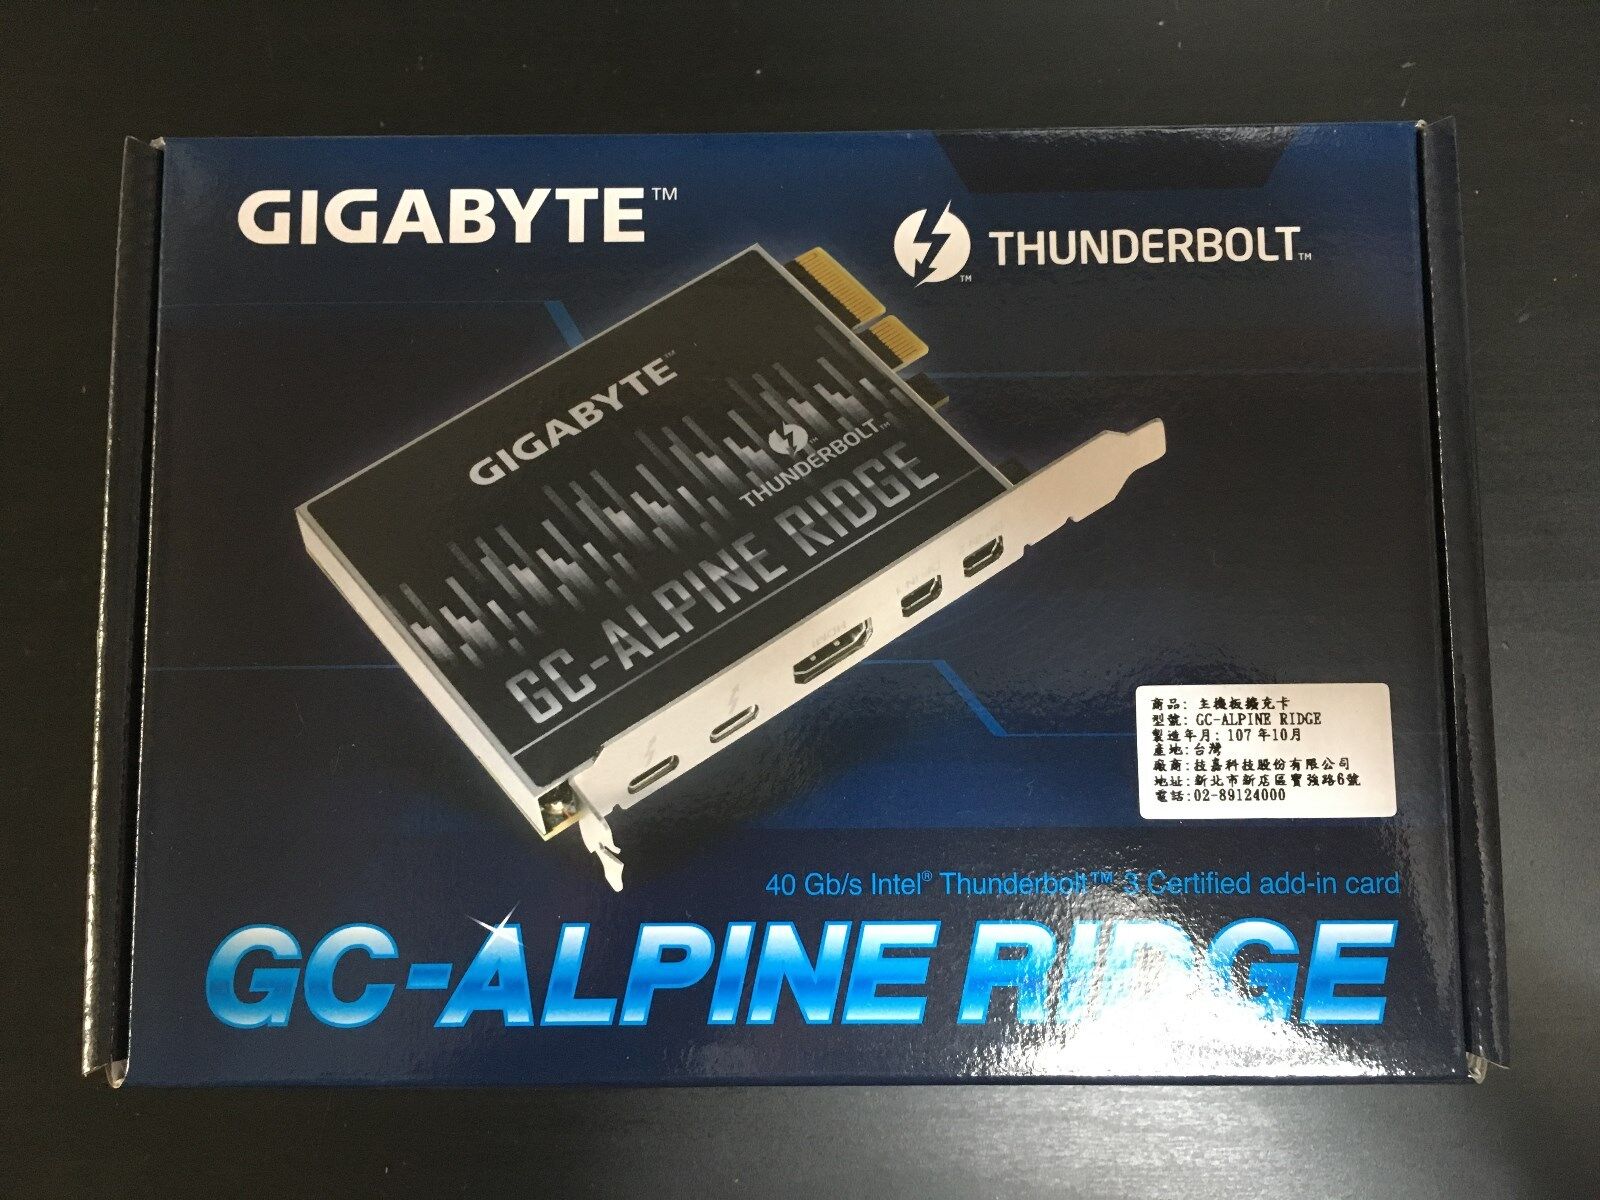 GIGABYTE GC-ALPINE RIDGE (Rev 2.0) Thunderbolt3 Certified PCI-E Expansion card